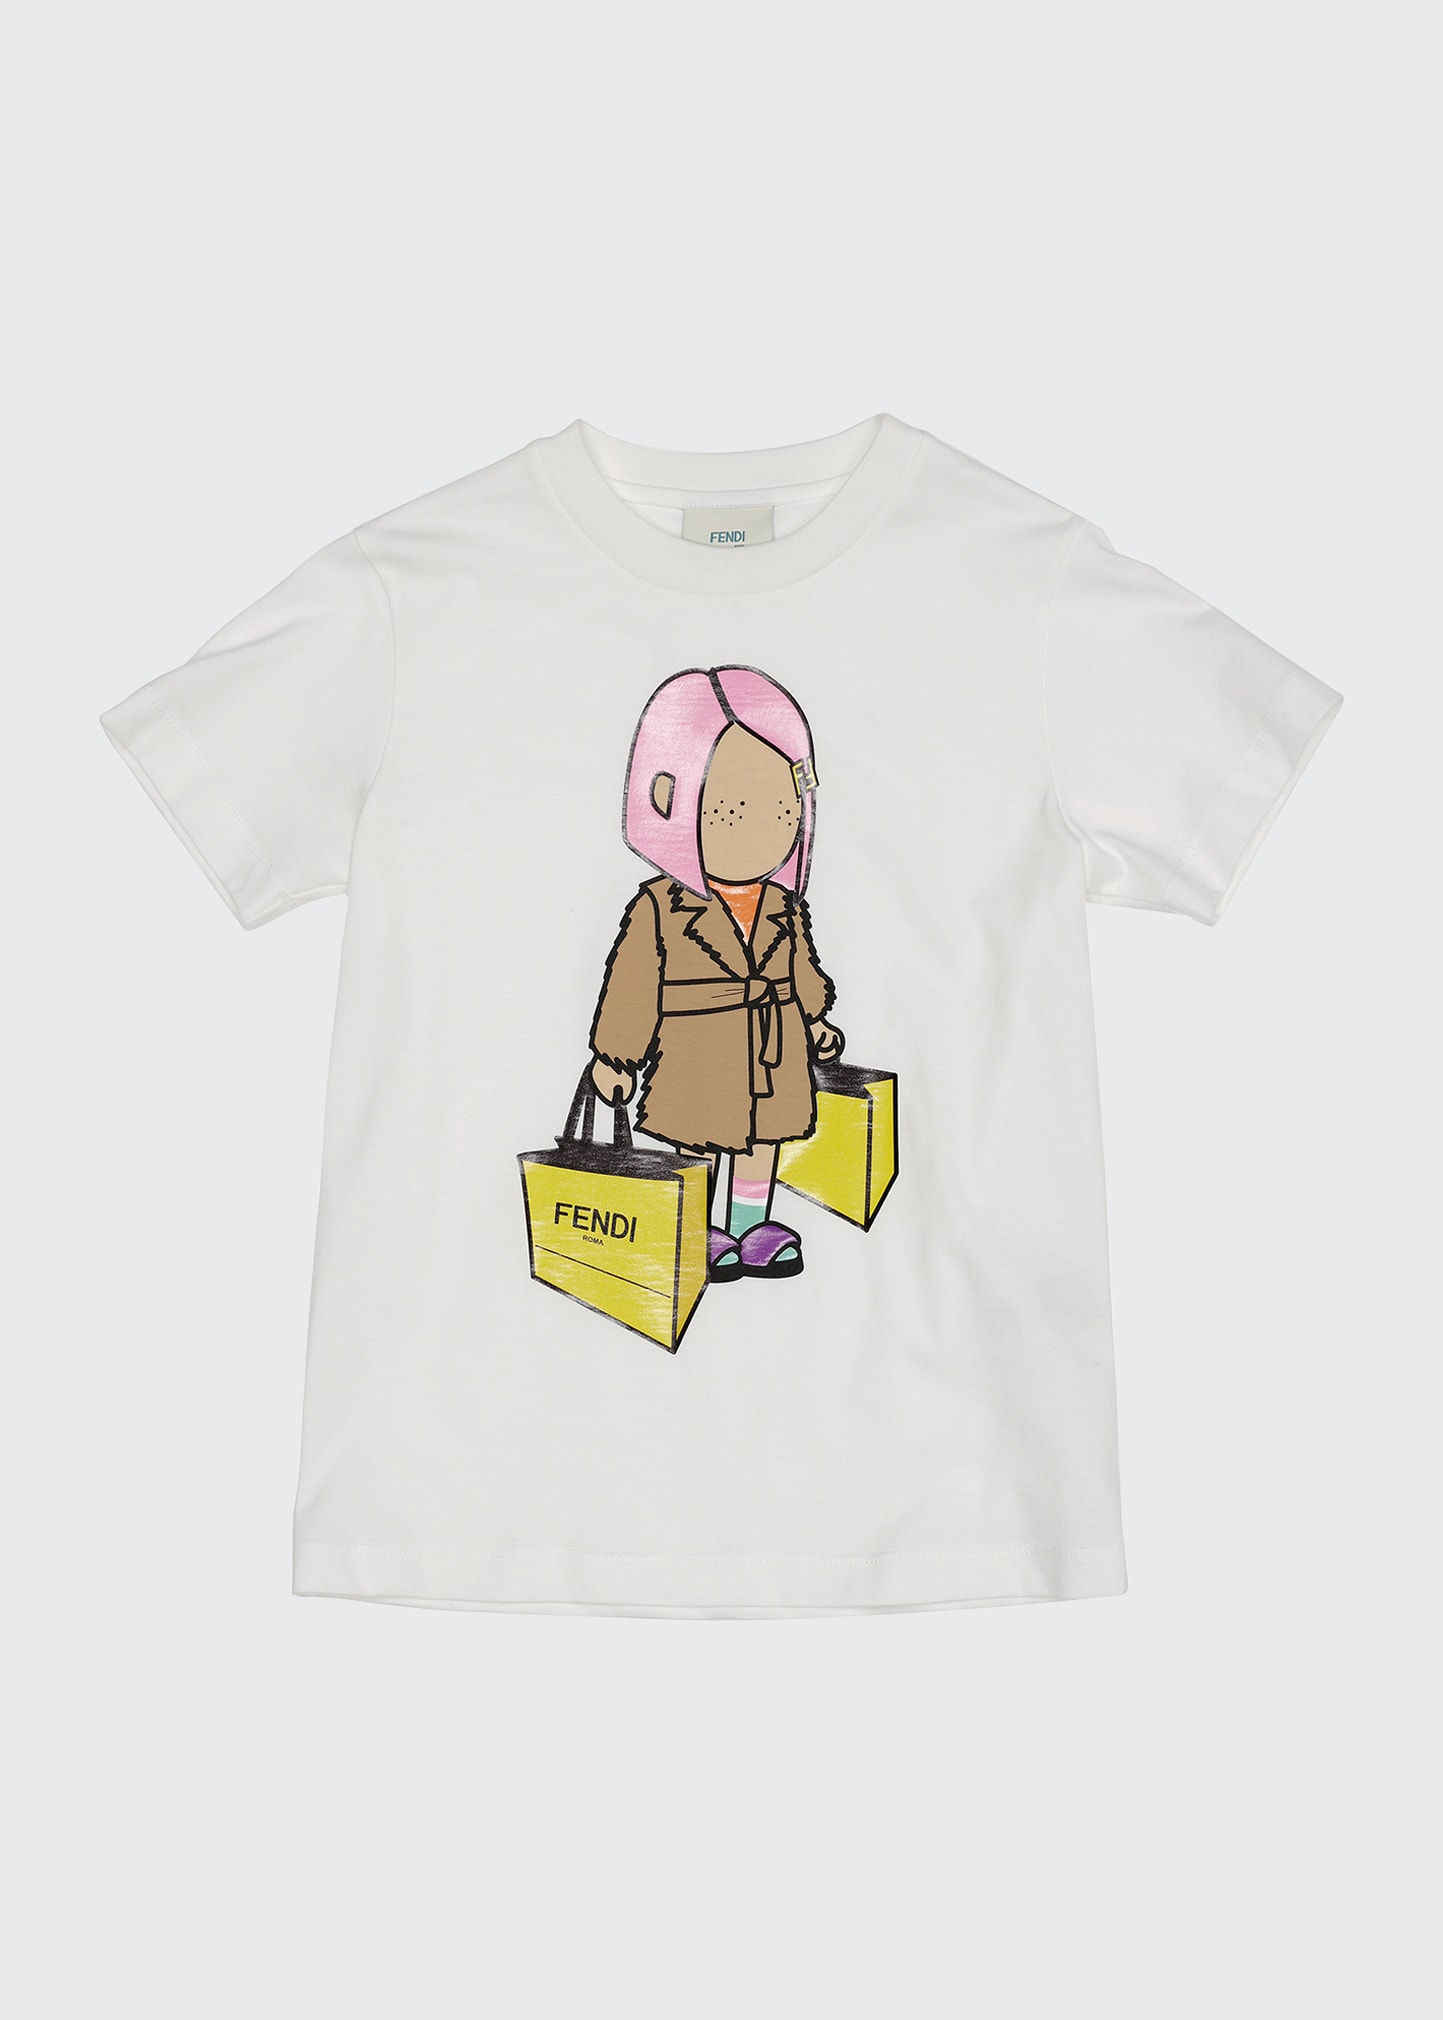 Fendi Girl's Logo Shopping Bag Graphic T-Shirt, Size 8-14